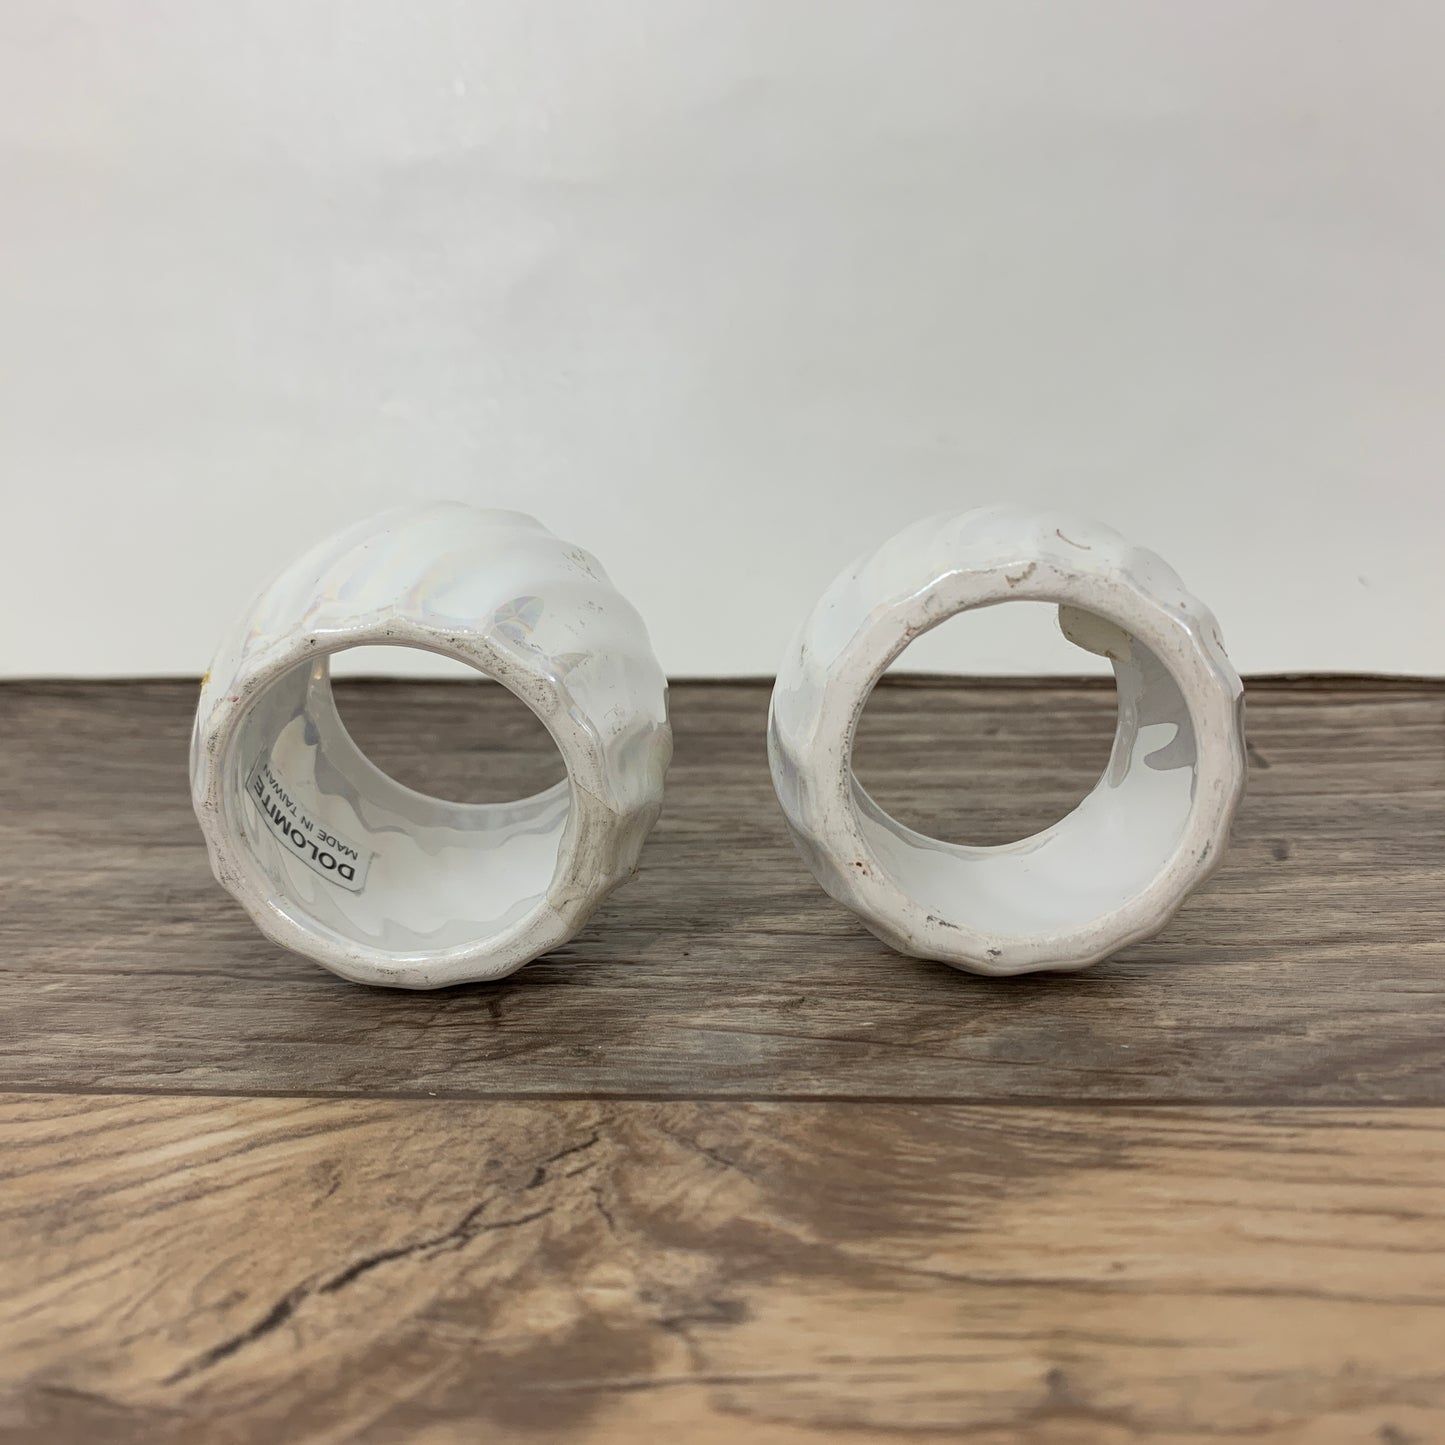 Pair of Iridescent Napkin Rings, White Lusterware Ribbed Napkin Rings